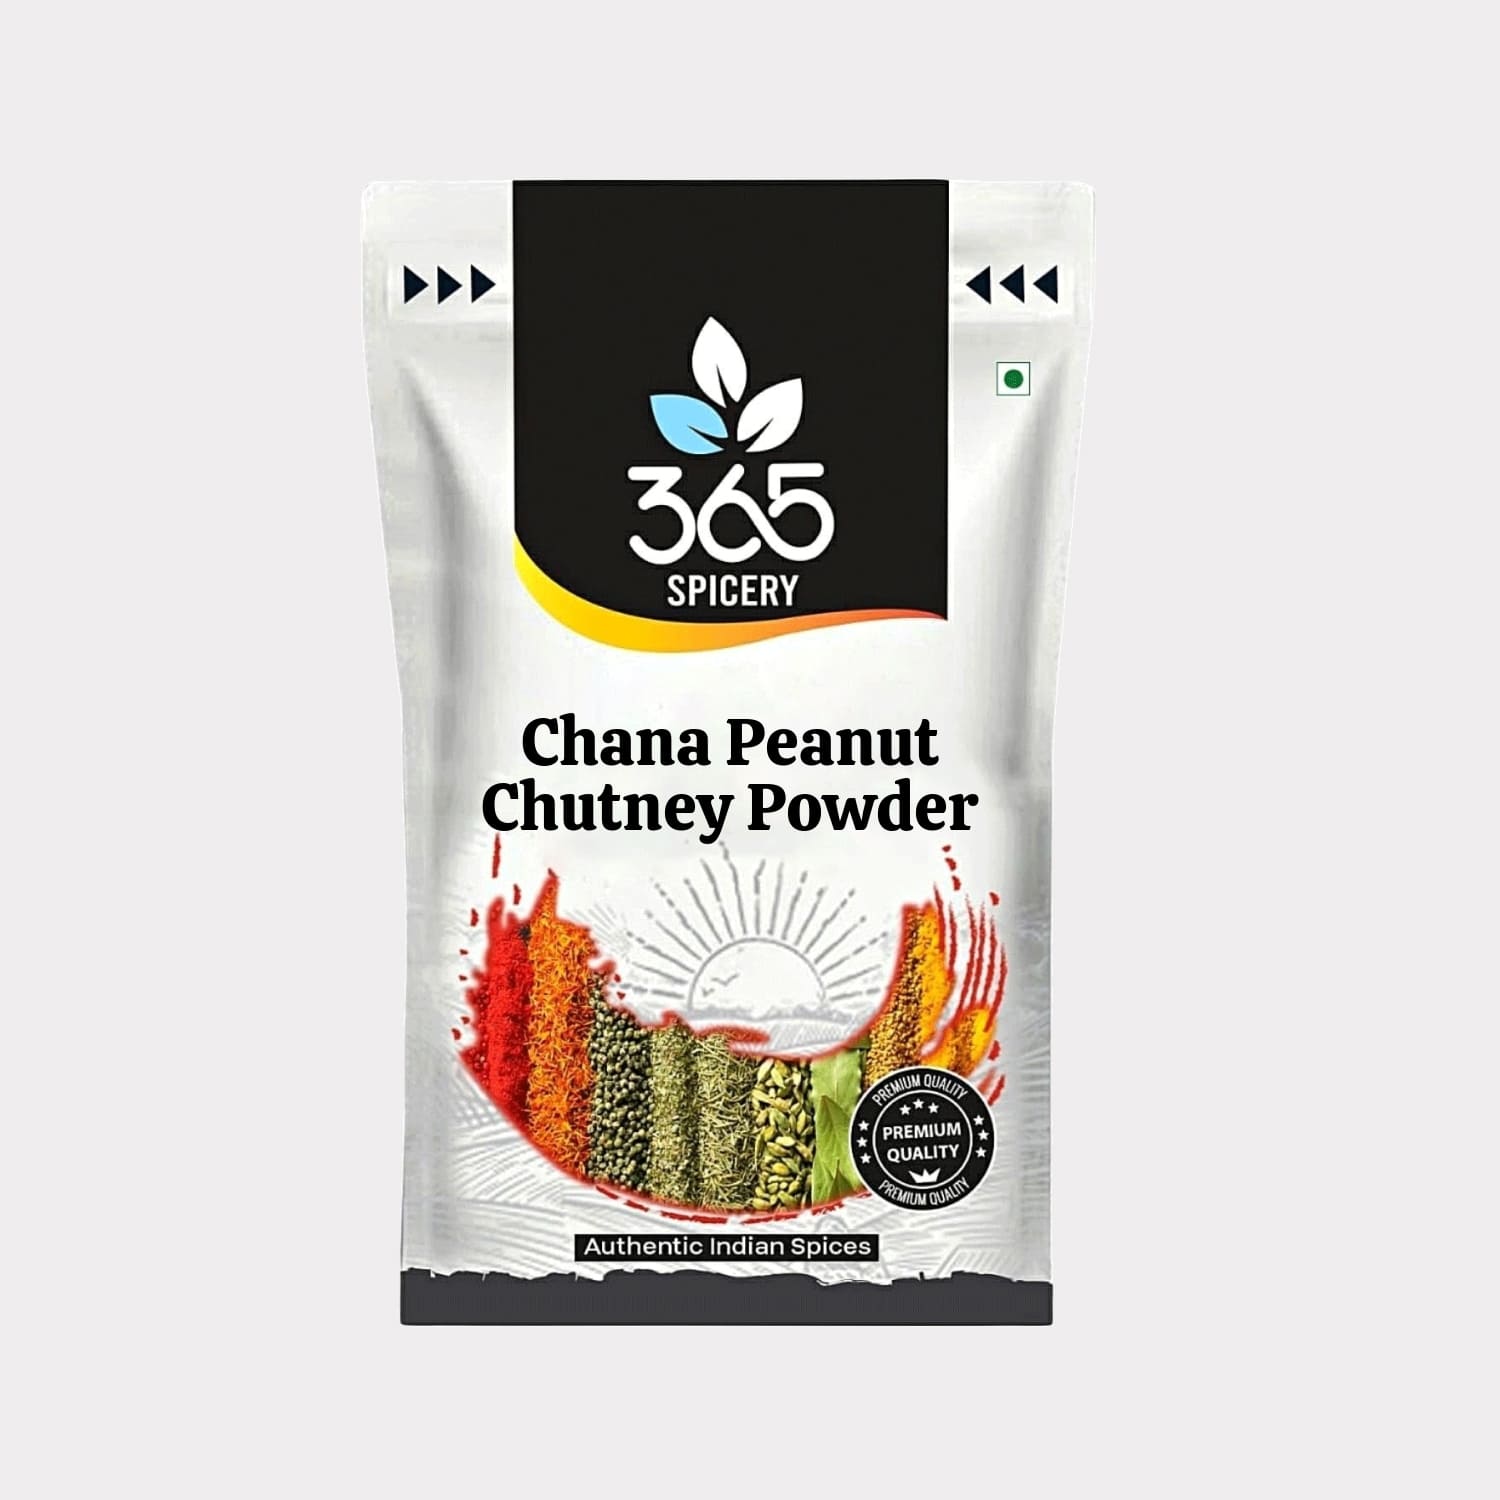 Chana Peanut Chutney Powder